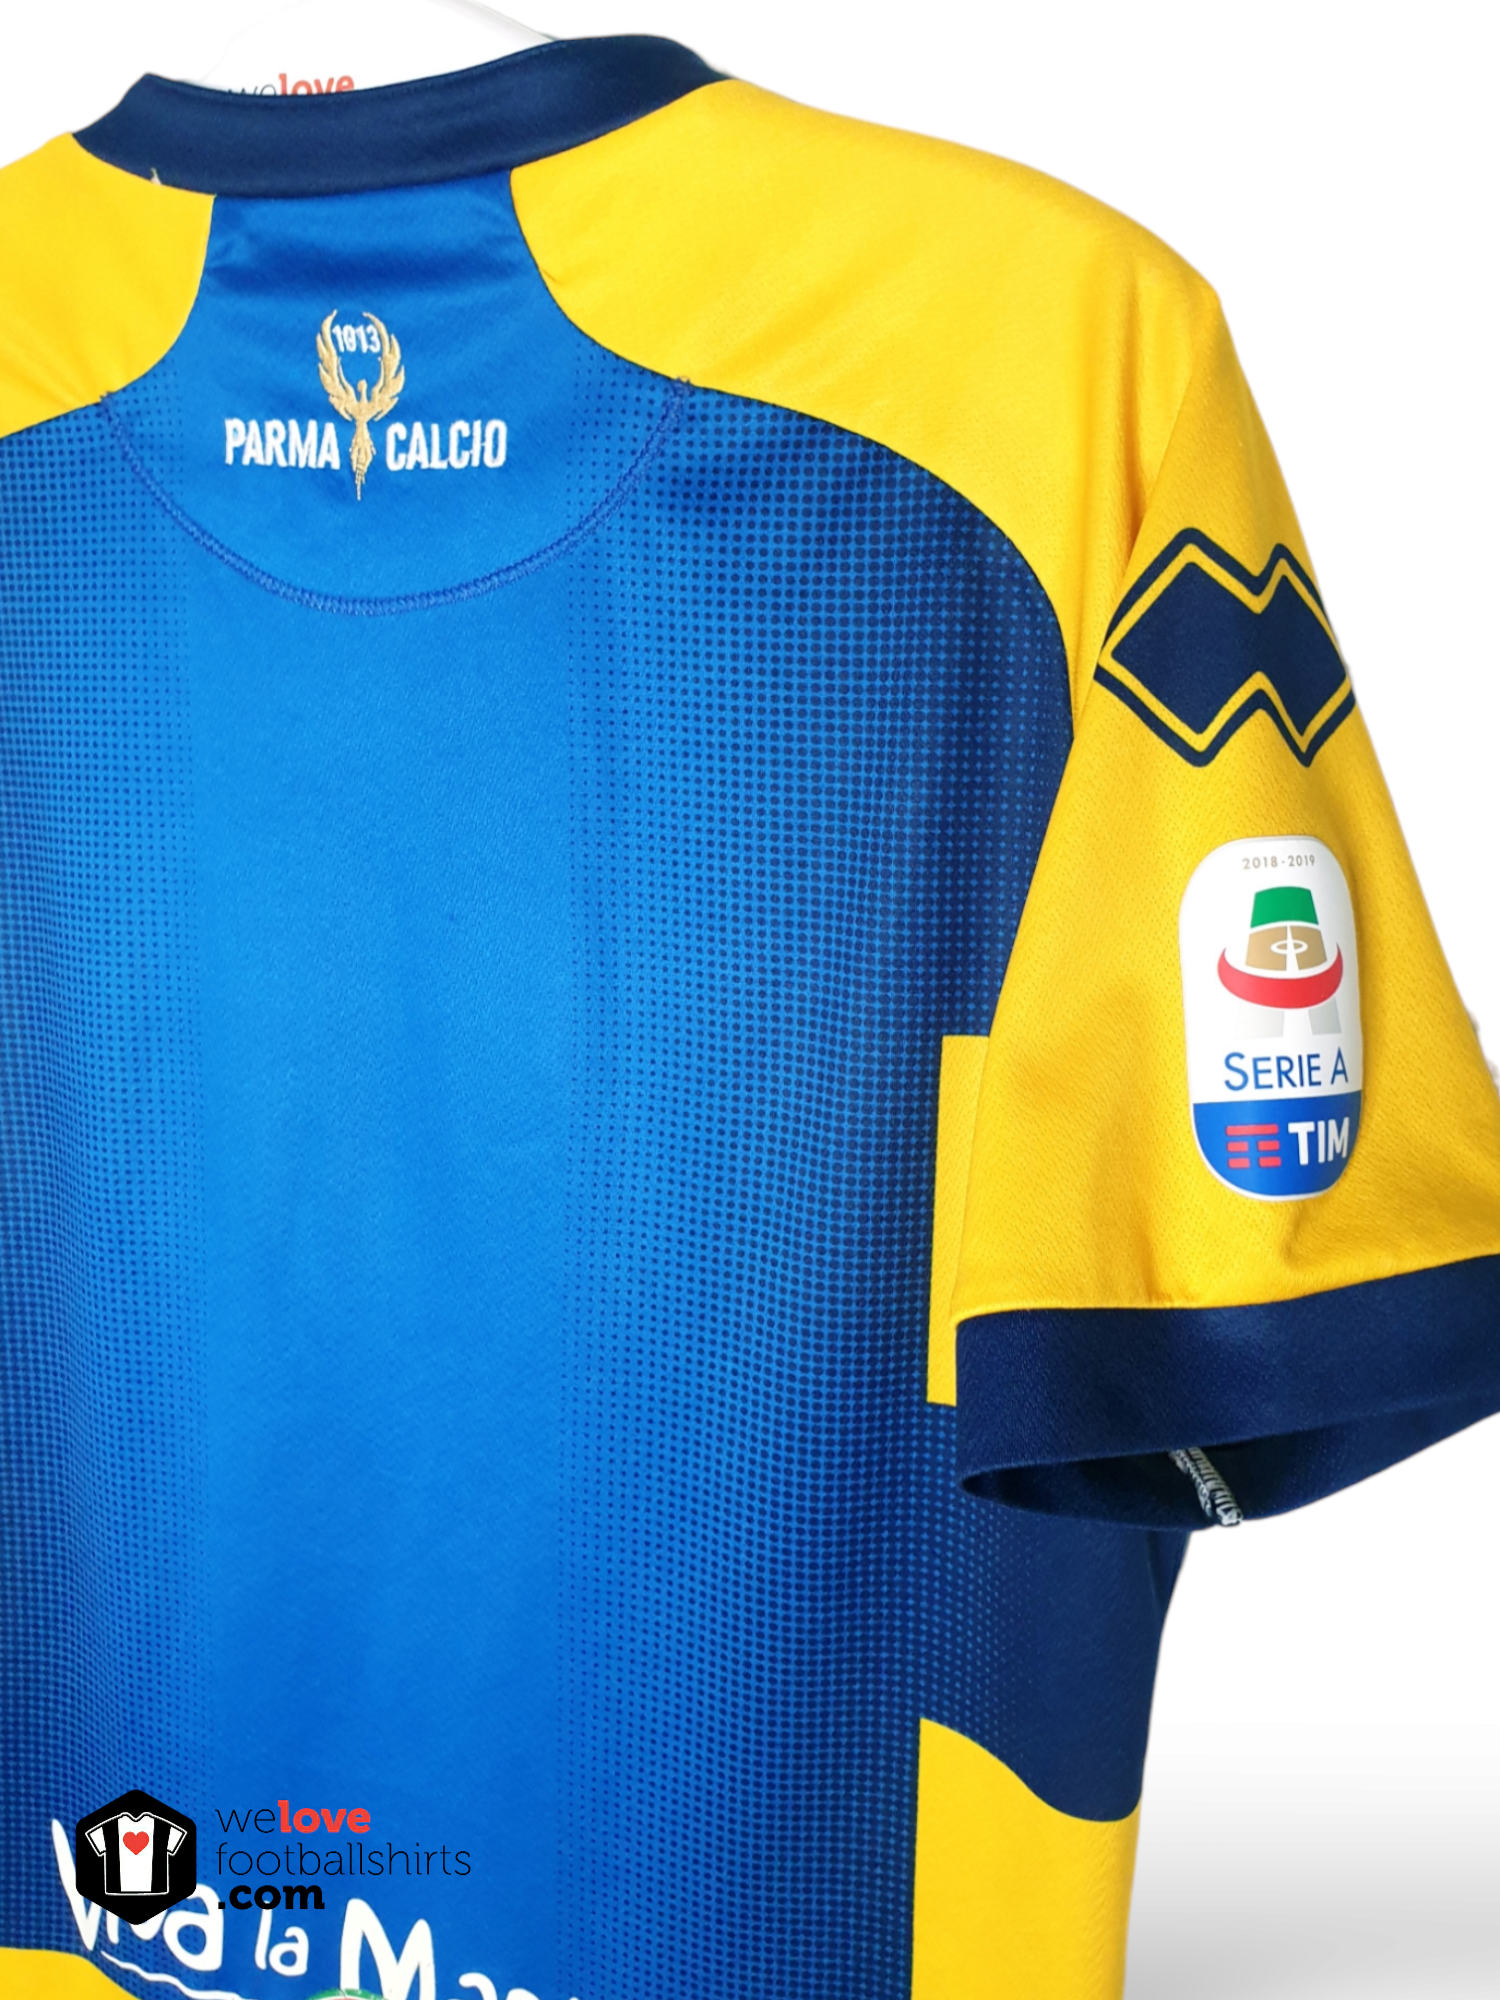 Parma Calcio 1913 Errea 2018/19 Home, Away and Third Kits